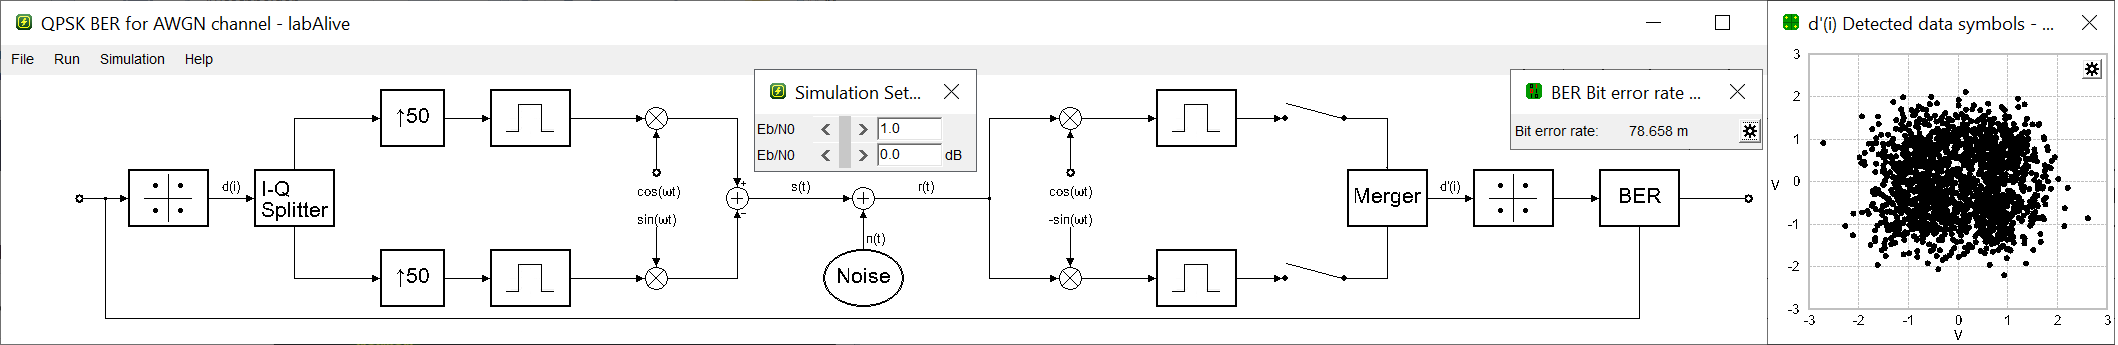 Quadrature phase-shift keying (QPSK) transmission